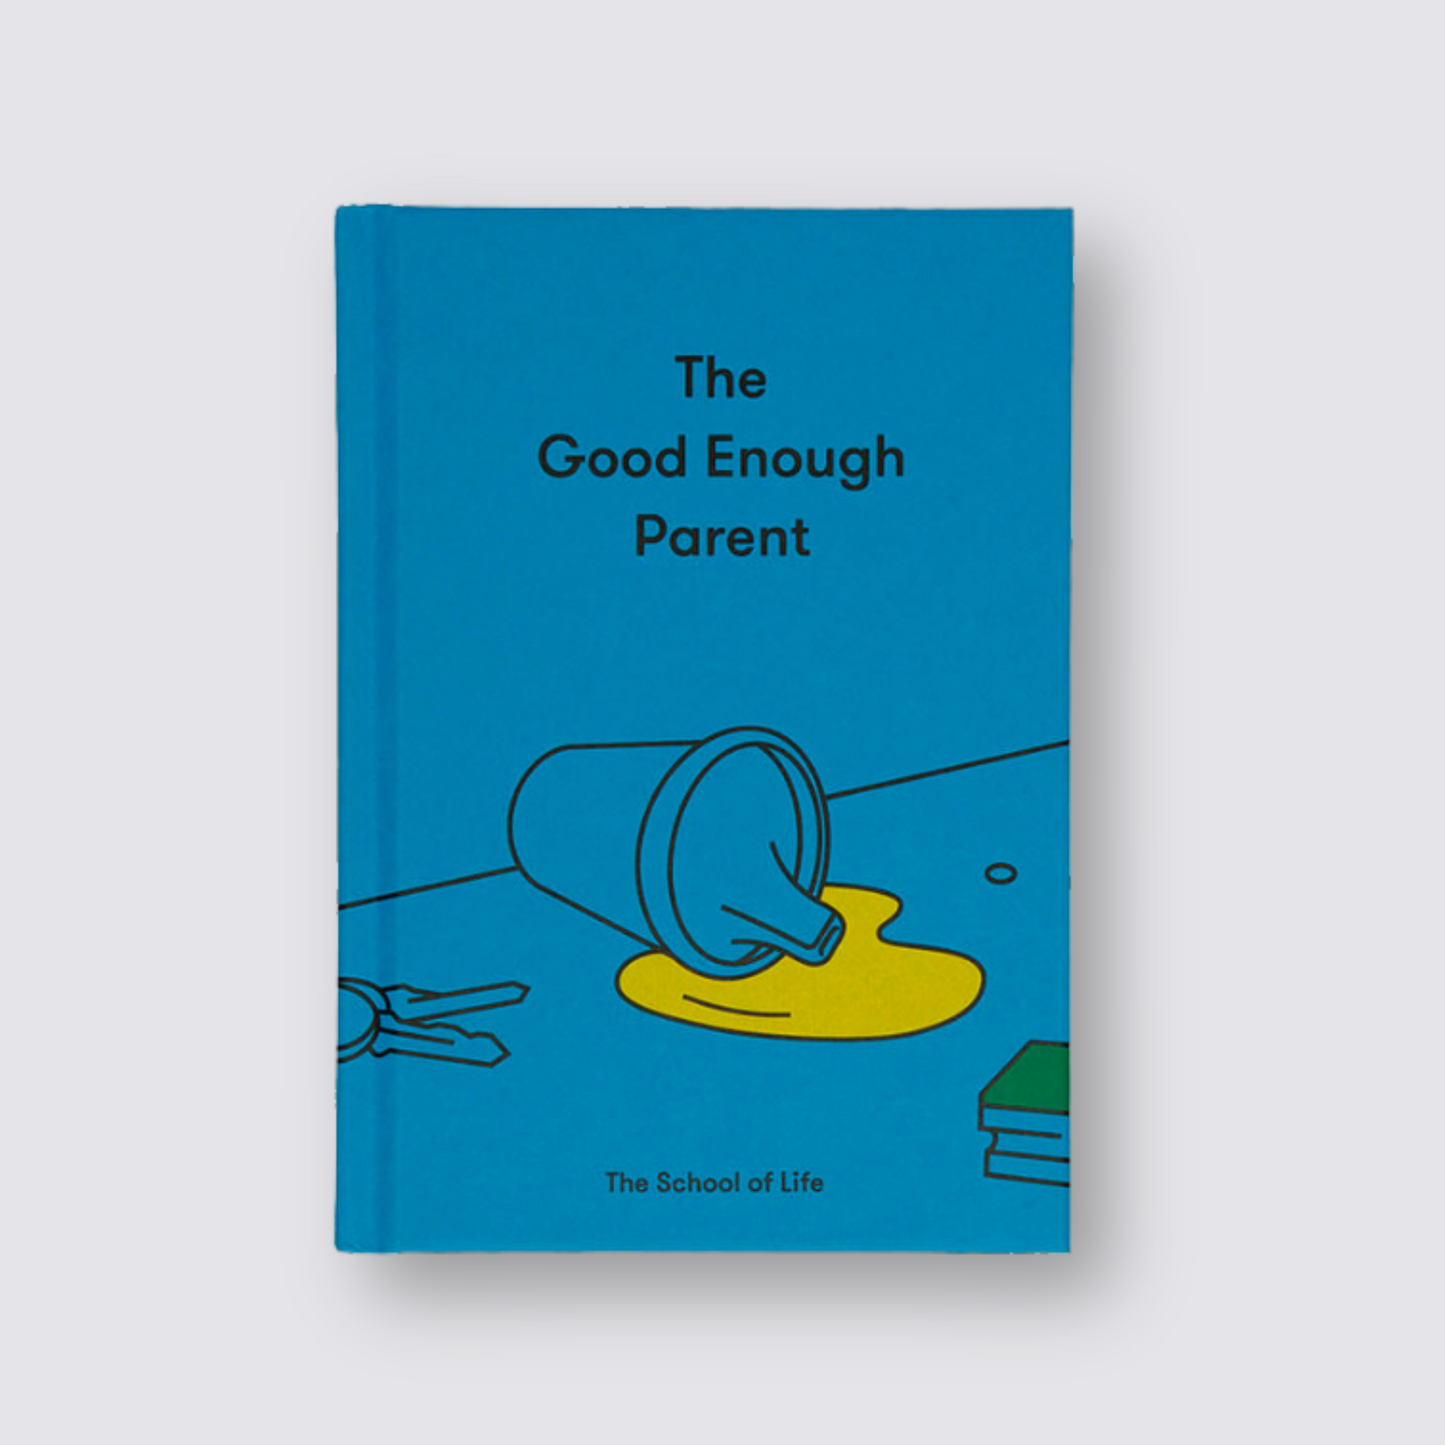 The Good Enough Parent book